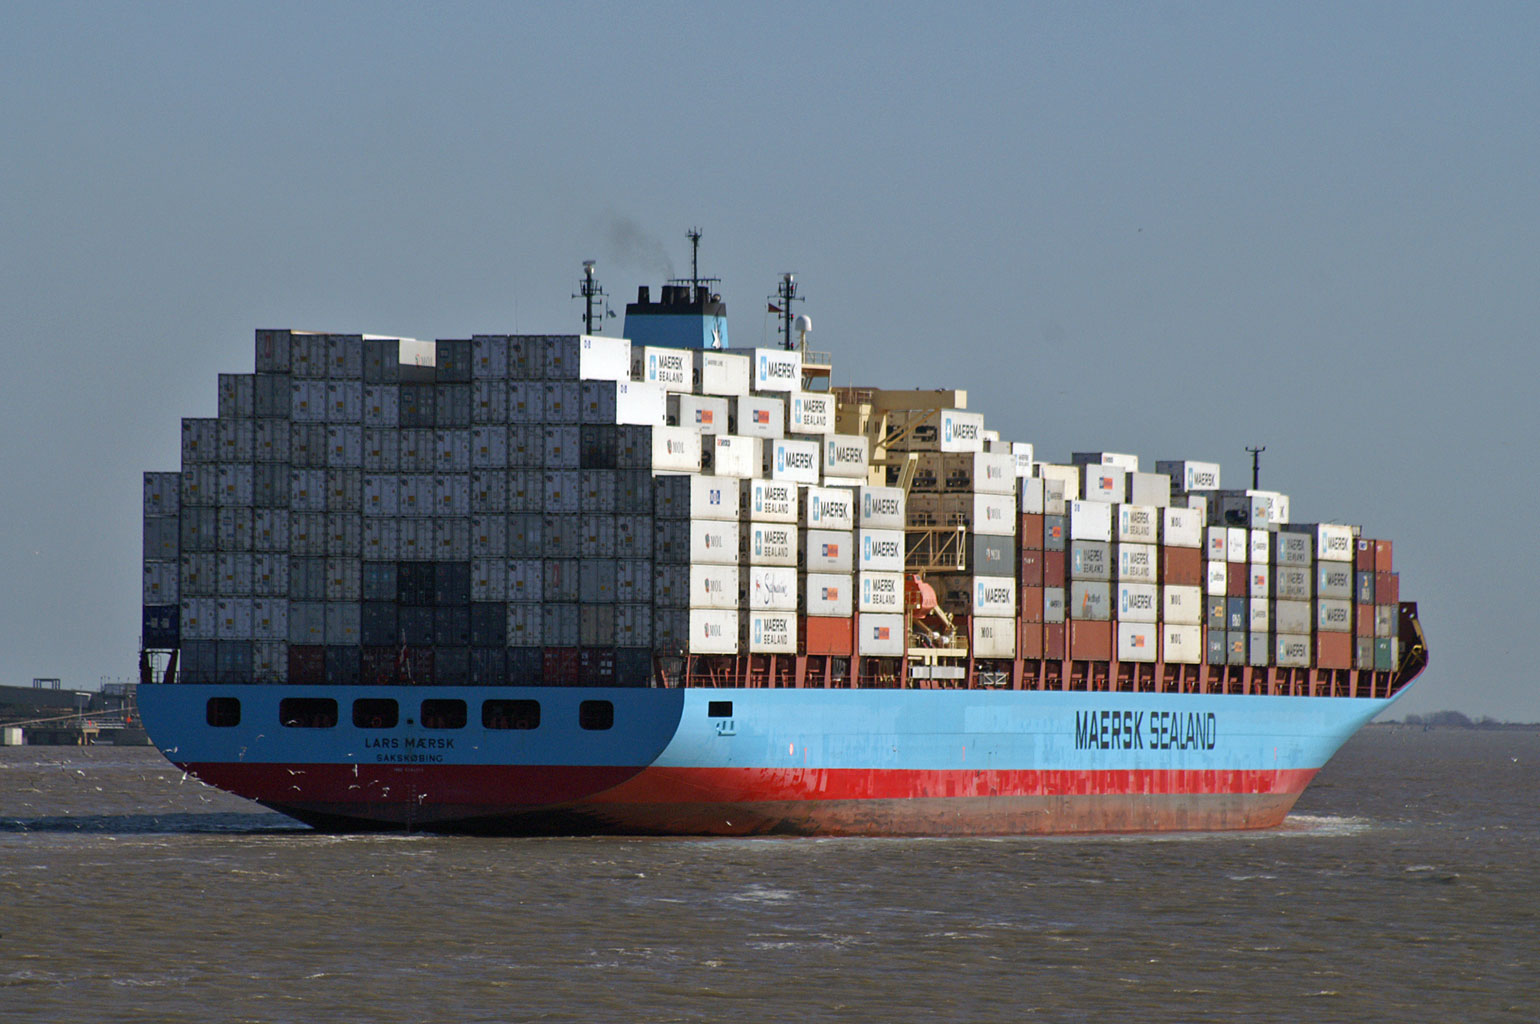 Van Puijfelik vs Maersk